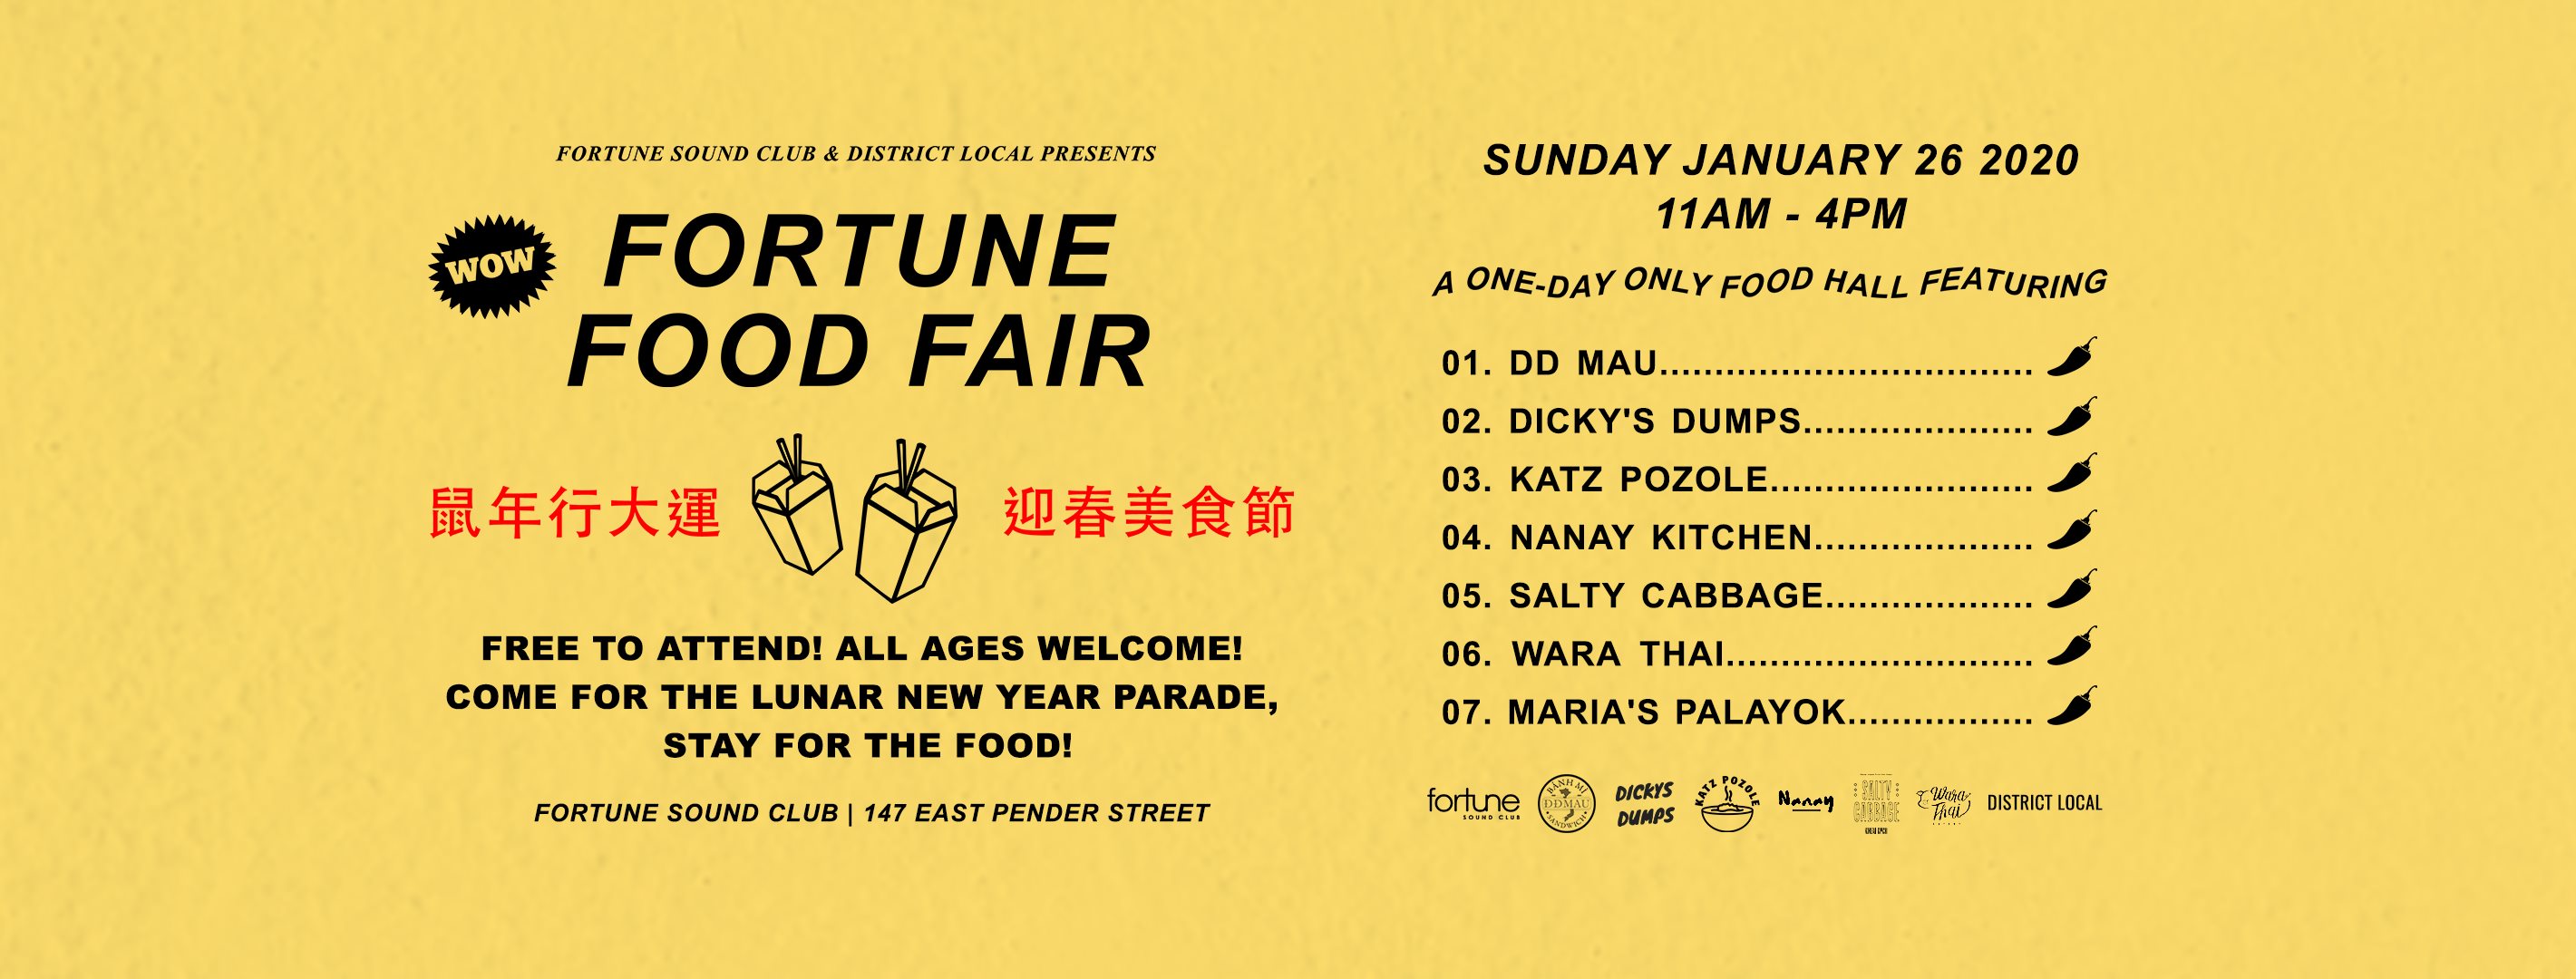 fortune food fair 2020